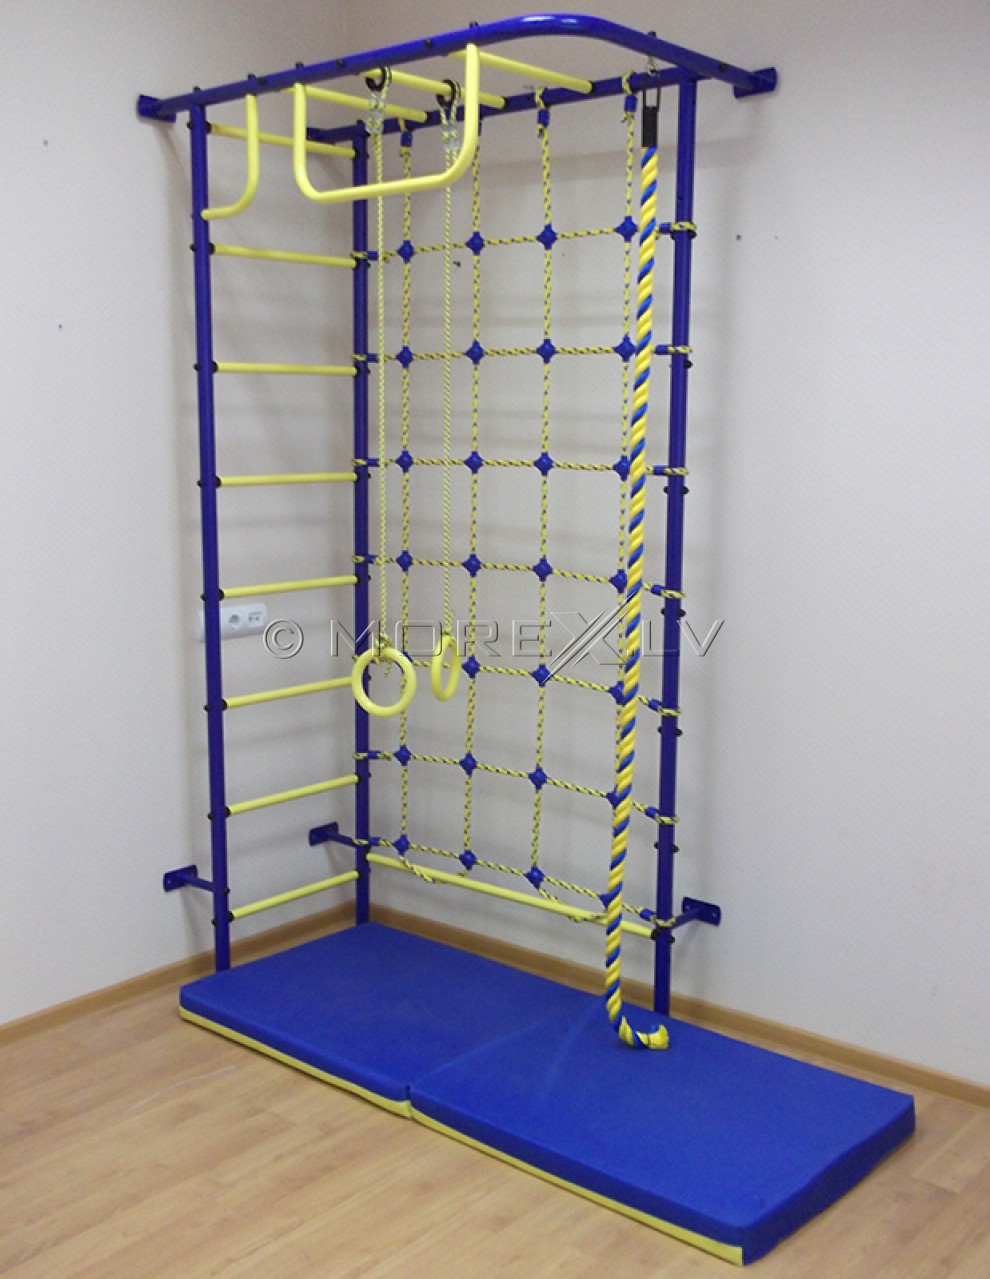 Bērnu sporta komplekss Pioner-8 zili-dzeltens (zviedru siena)